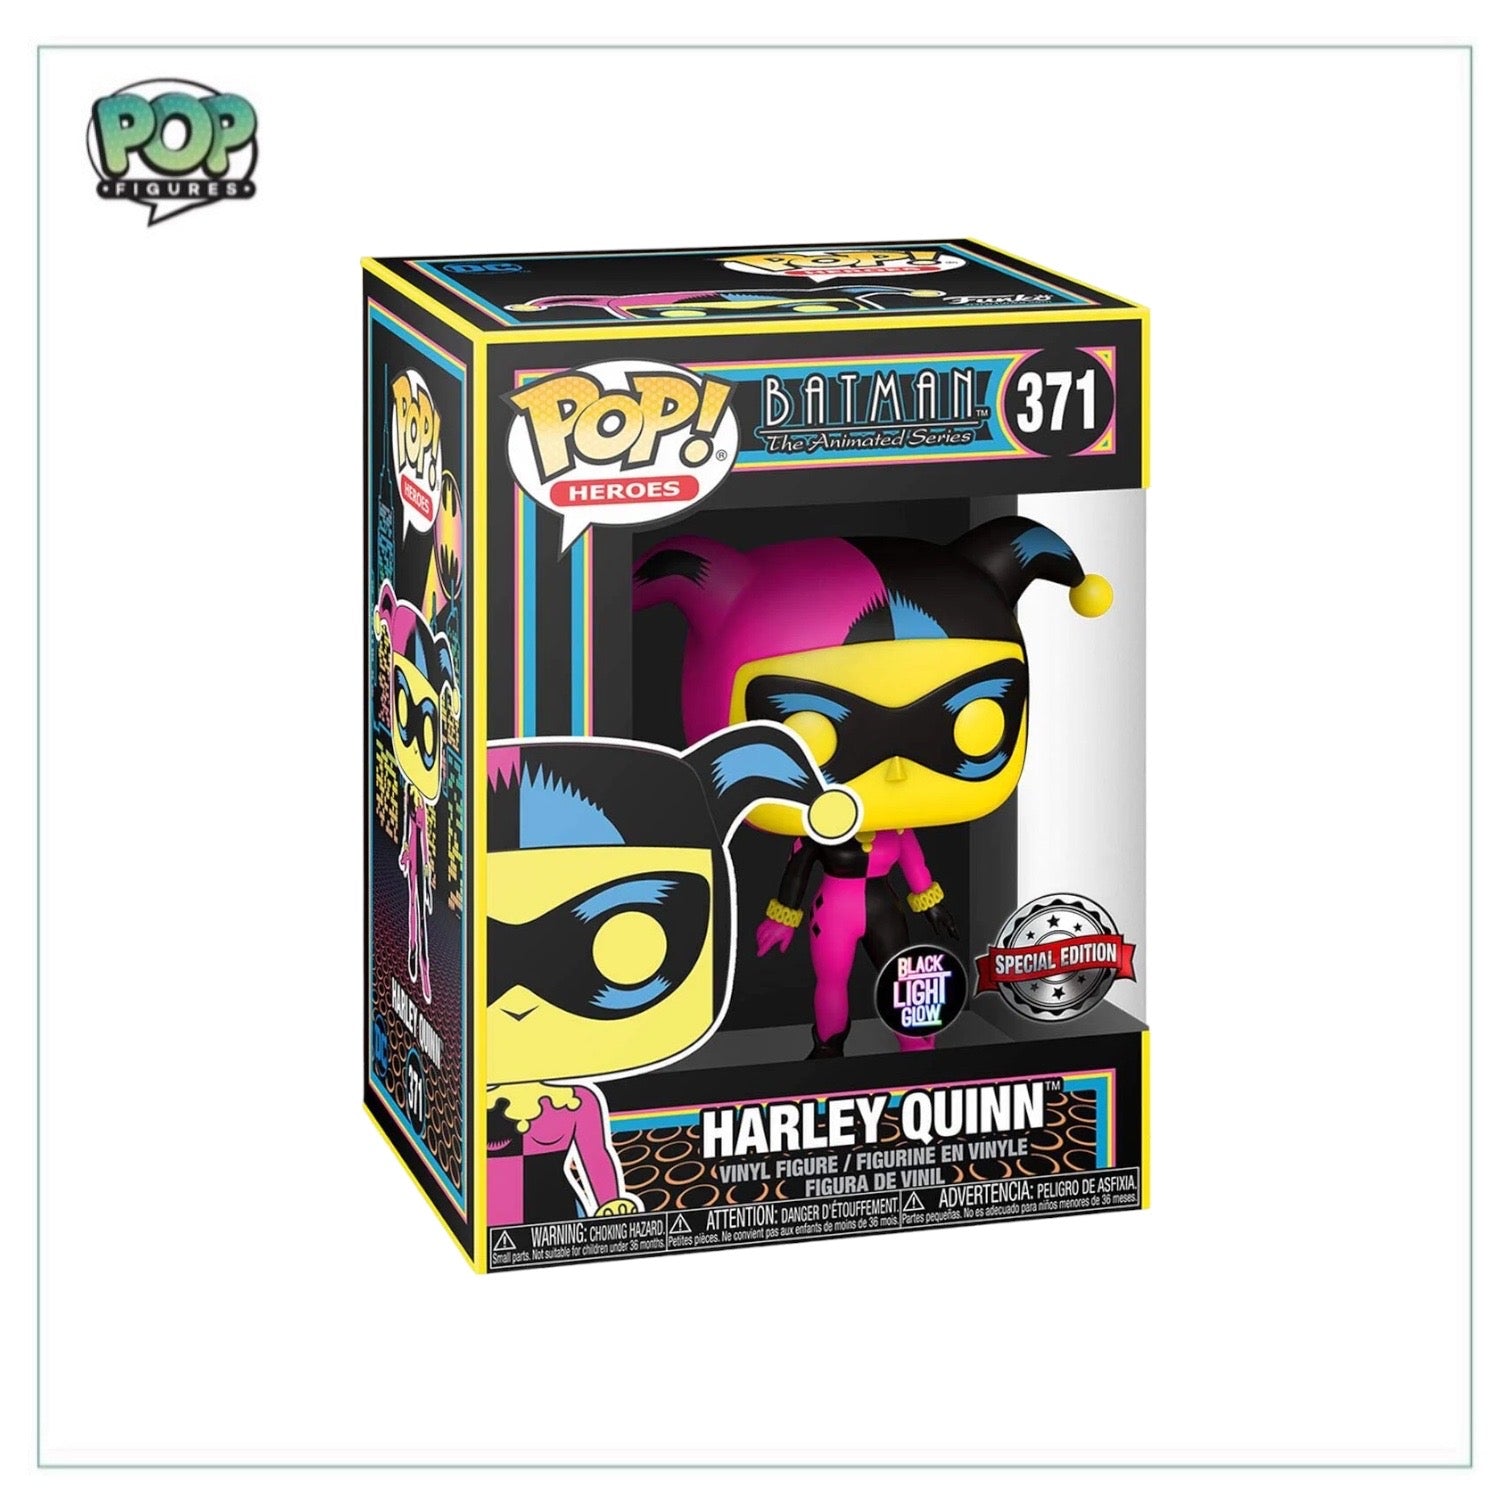 Harley Quinn #371 (Black Light) Funko Pop! - Batman: The Animated Series - Special Edition